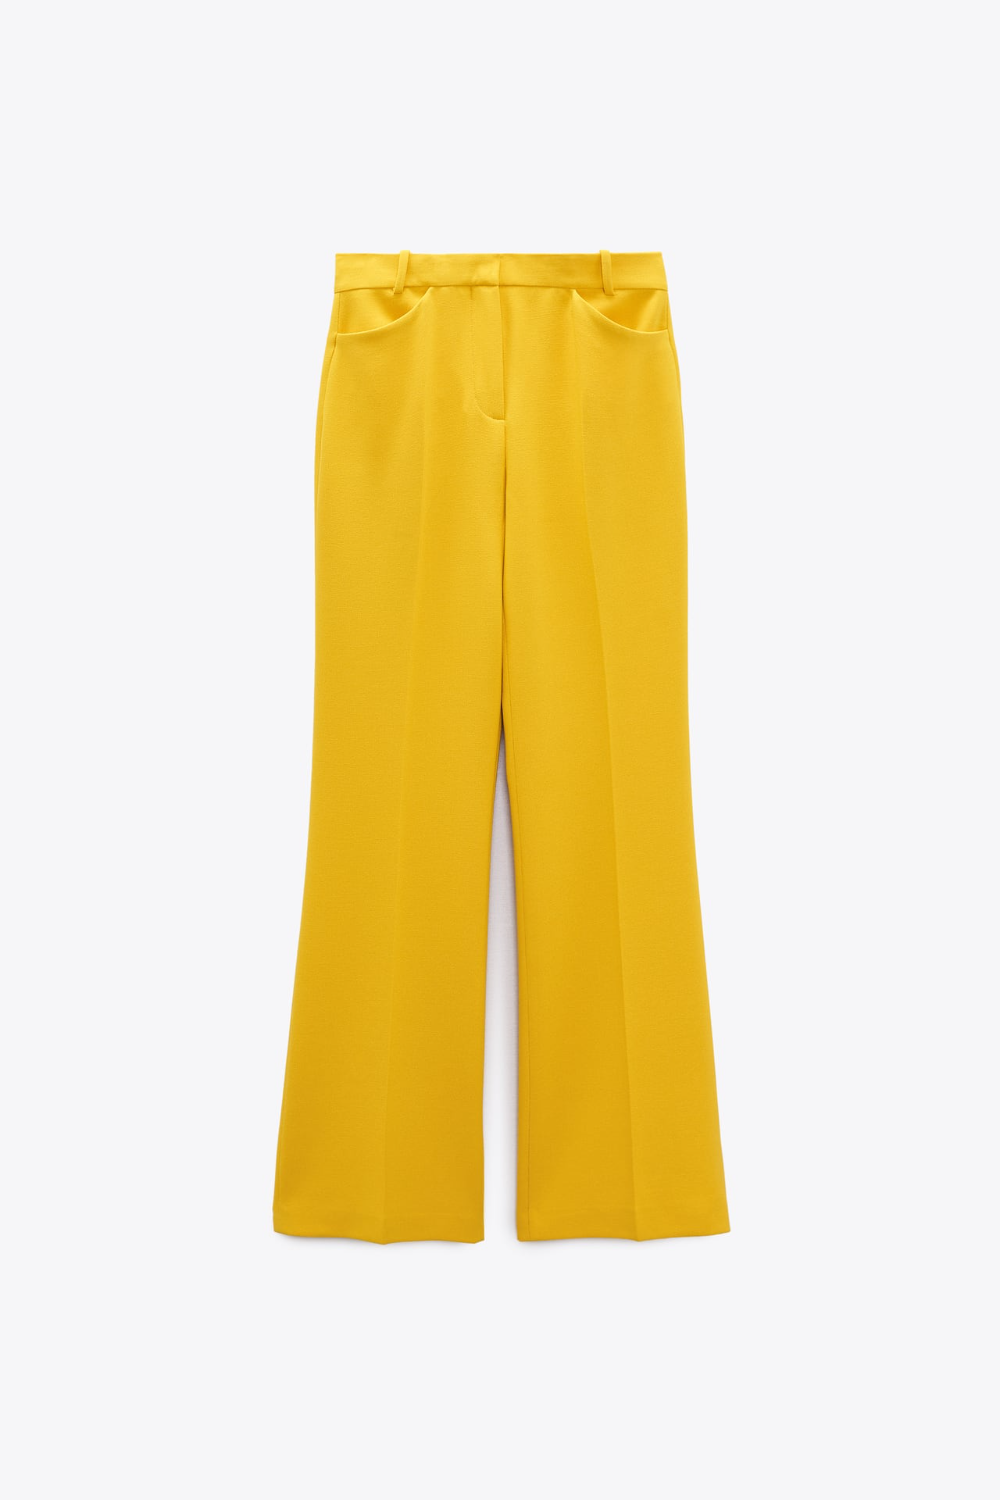 https://flyfiercefab.com/wp-content/uploads/2022/03/Zara-yellow-textured-flared-pants.png